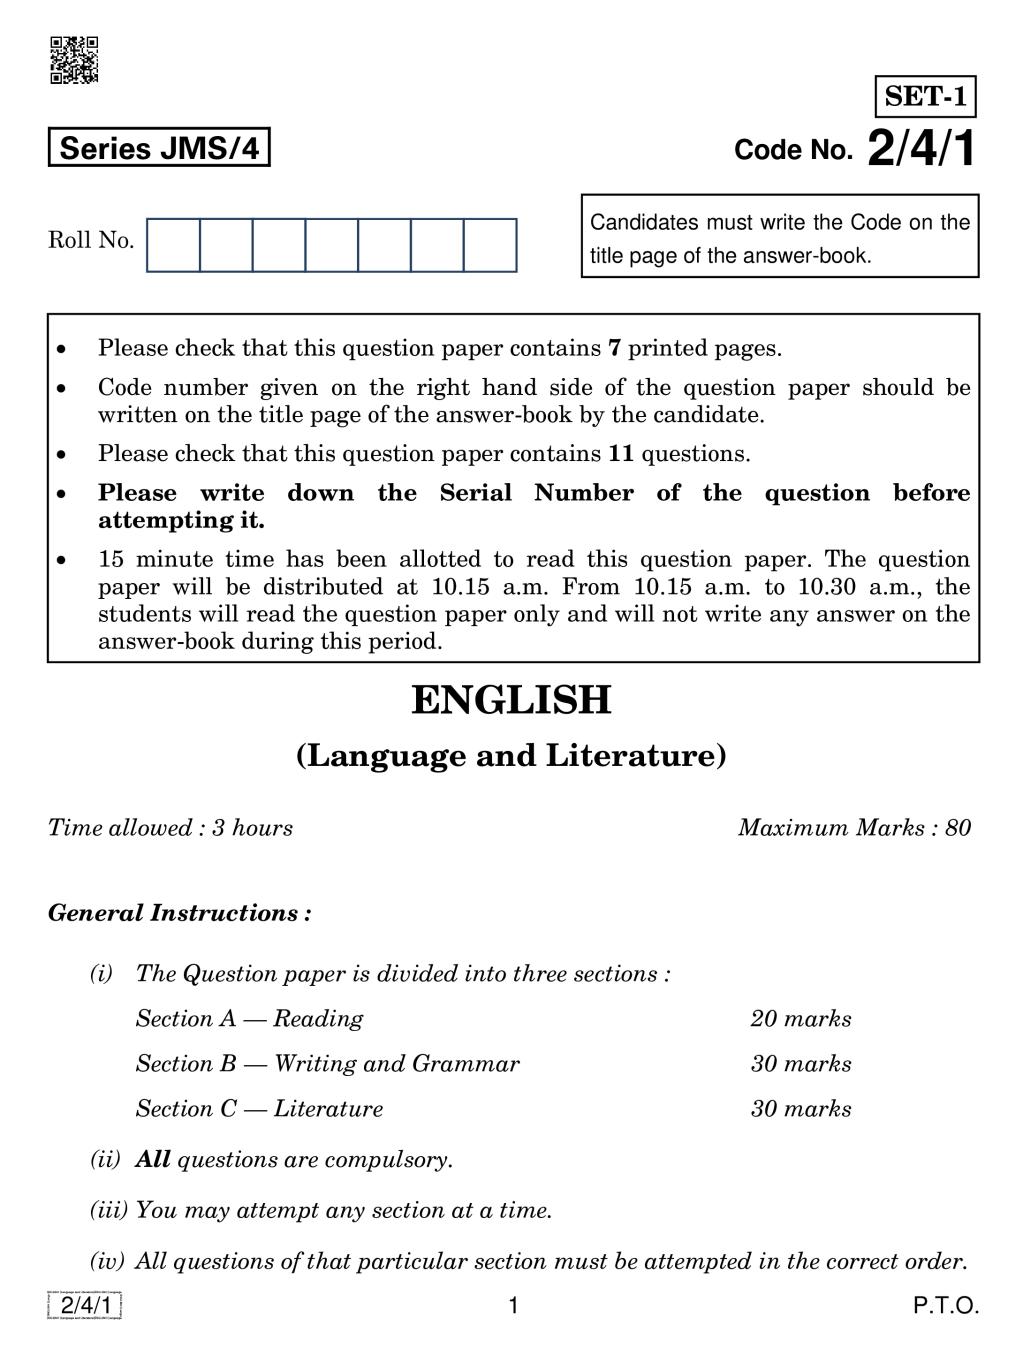 english grammar worksheets for class 10 cbse